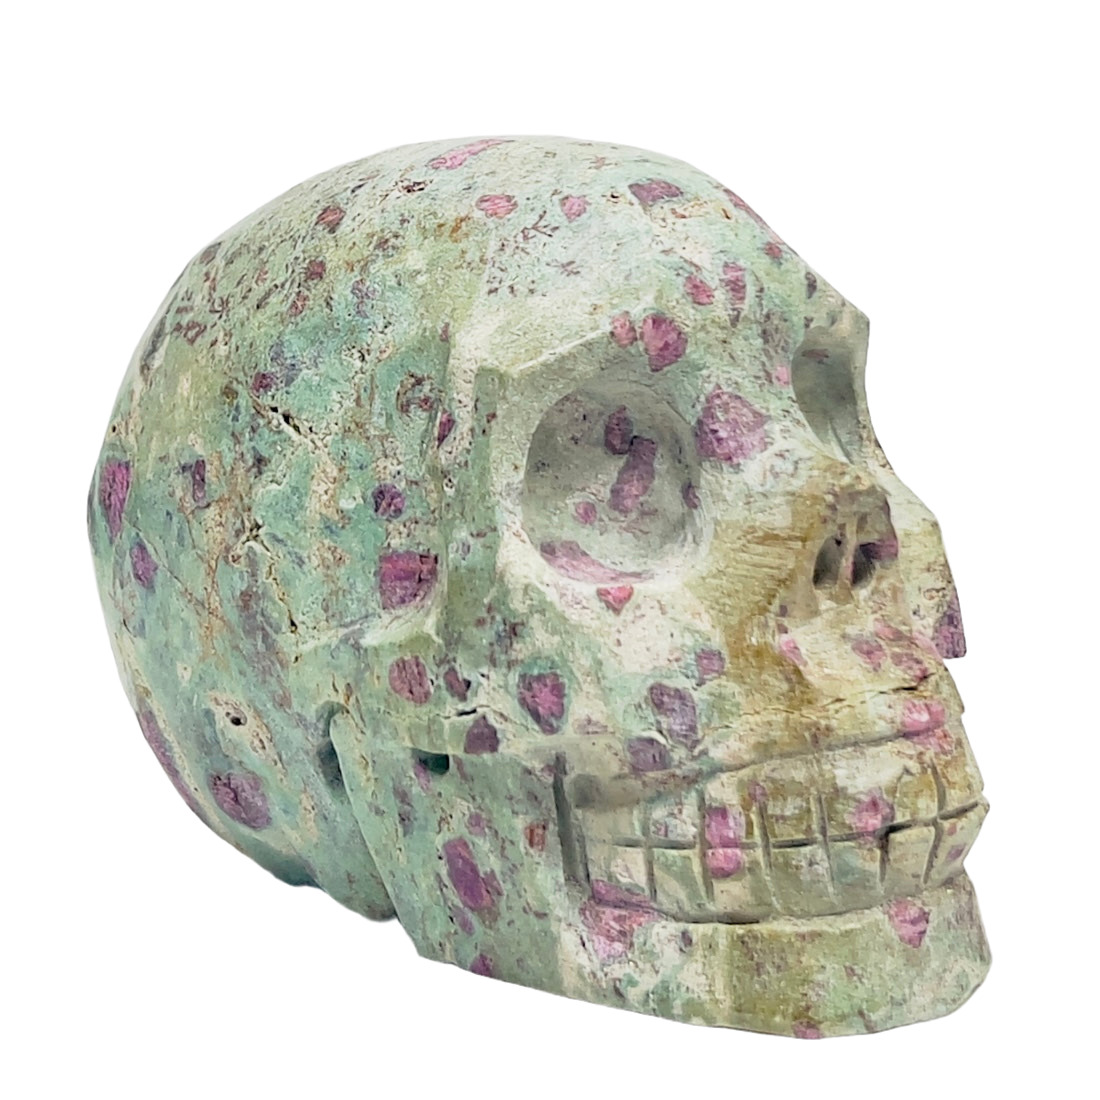 Ruby in Fuchsite Skull UV Reactive Healing Crystal Carving 1086g